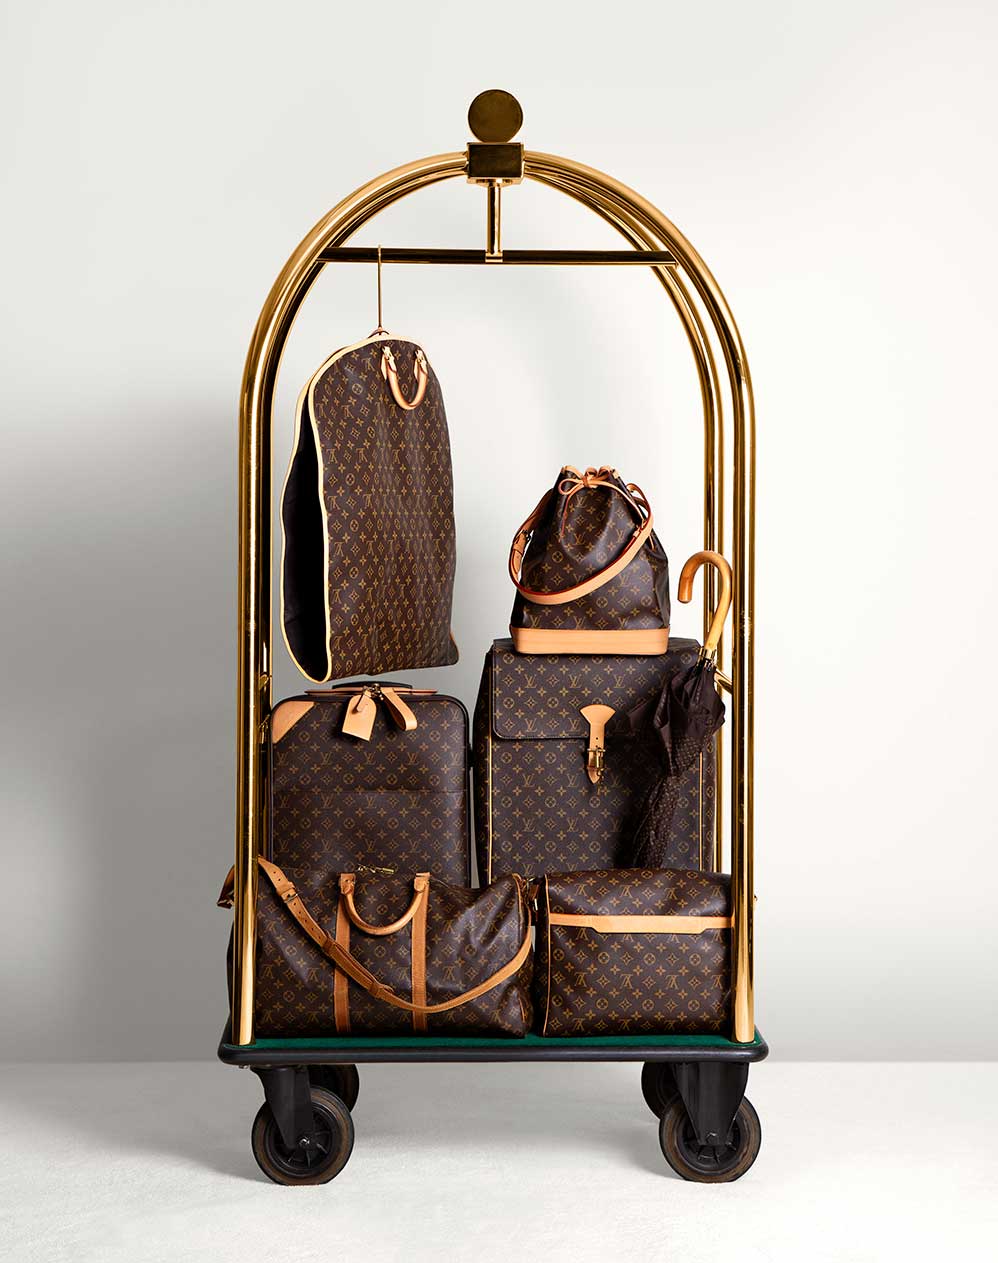 Sold at Auction: Louis Vuitton, Louis Vuitton Rolling Luggage Case